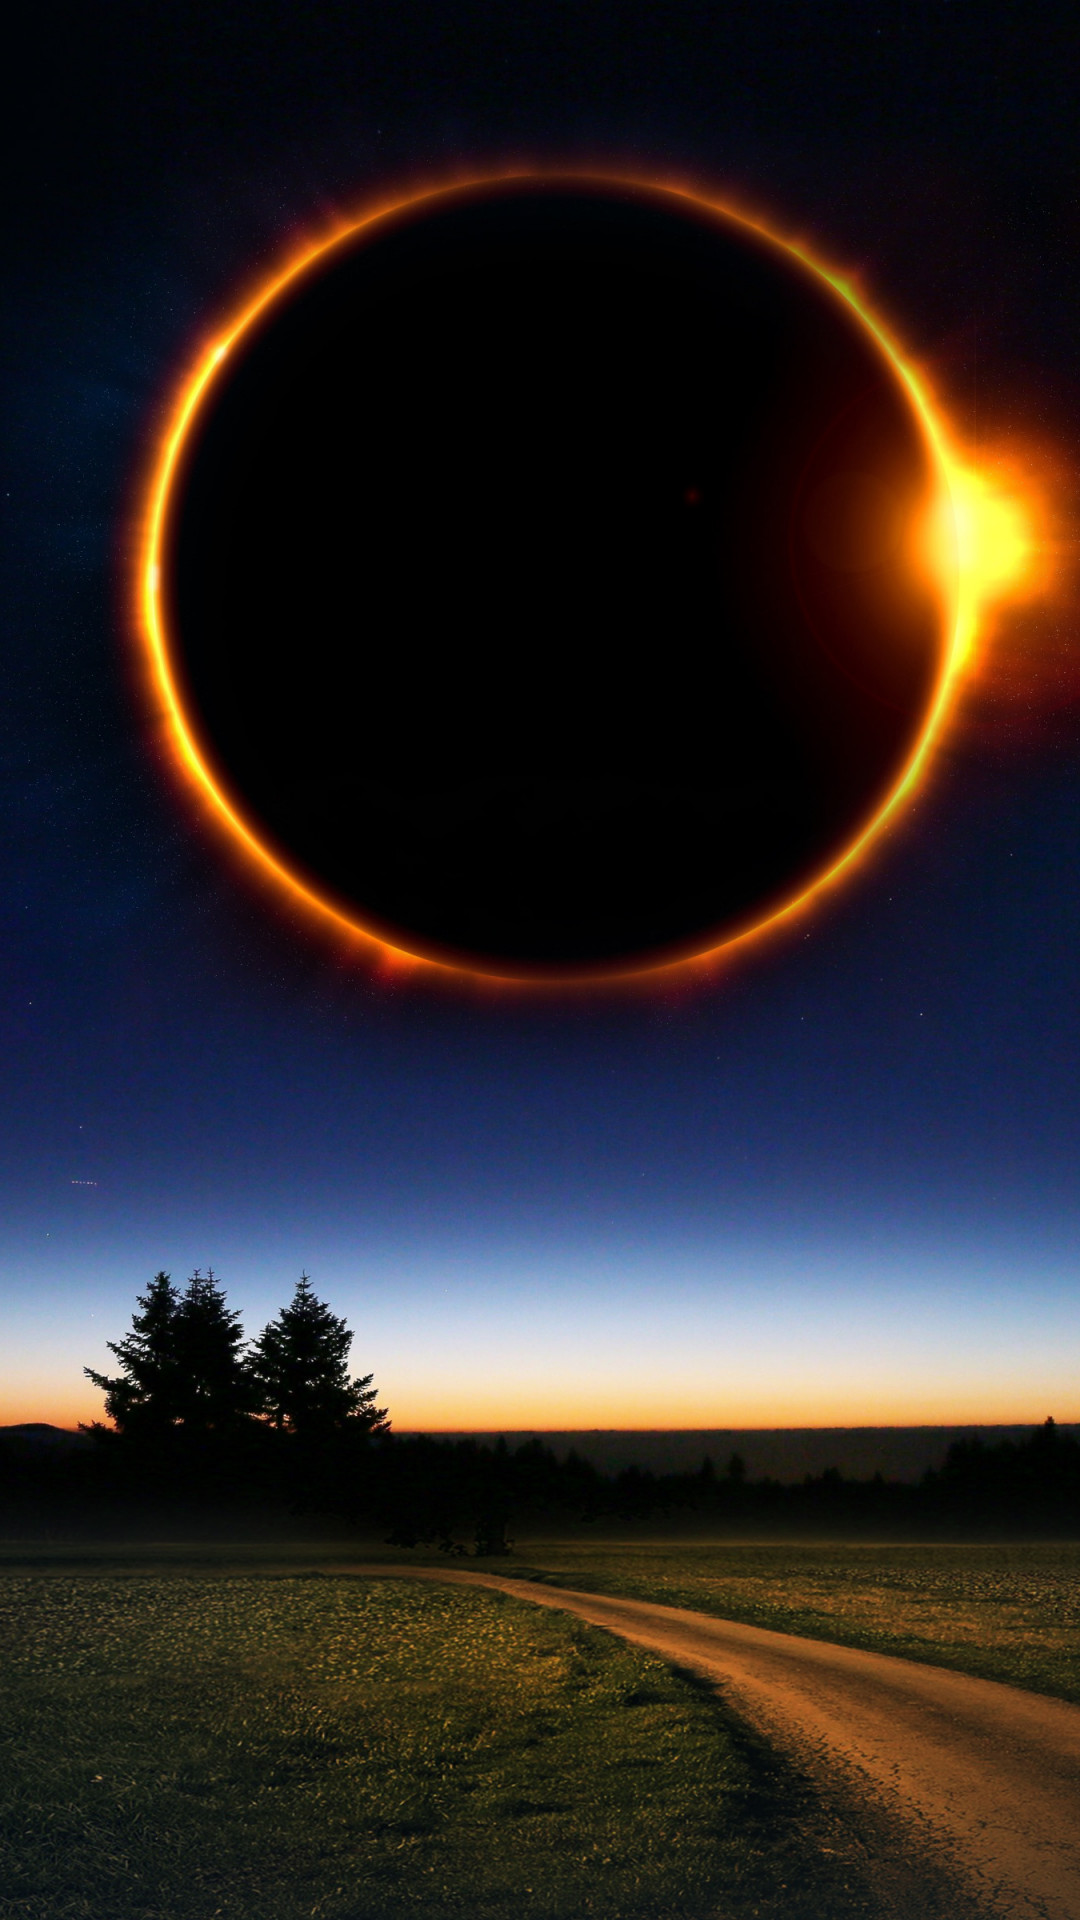 Download wallpaper: Fantasy solar eclipse 1080x1920